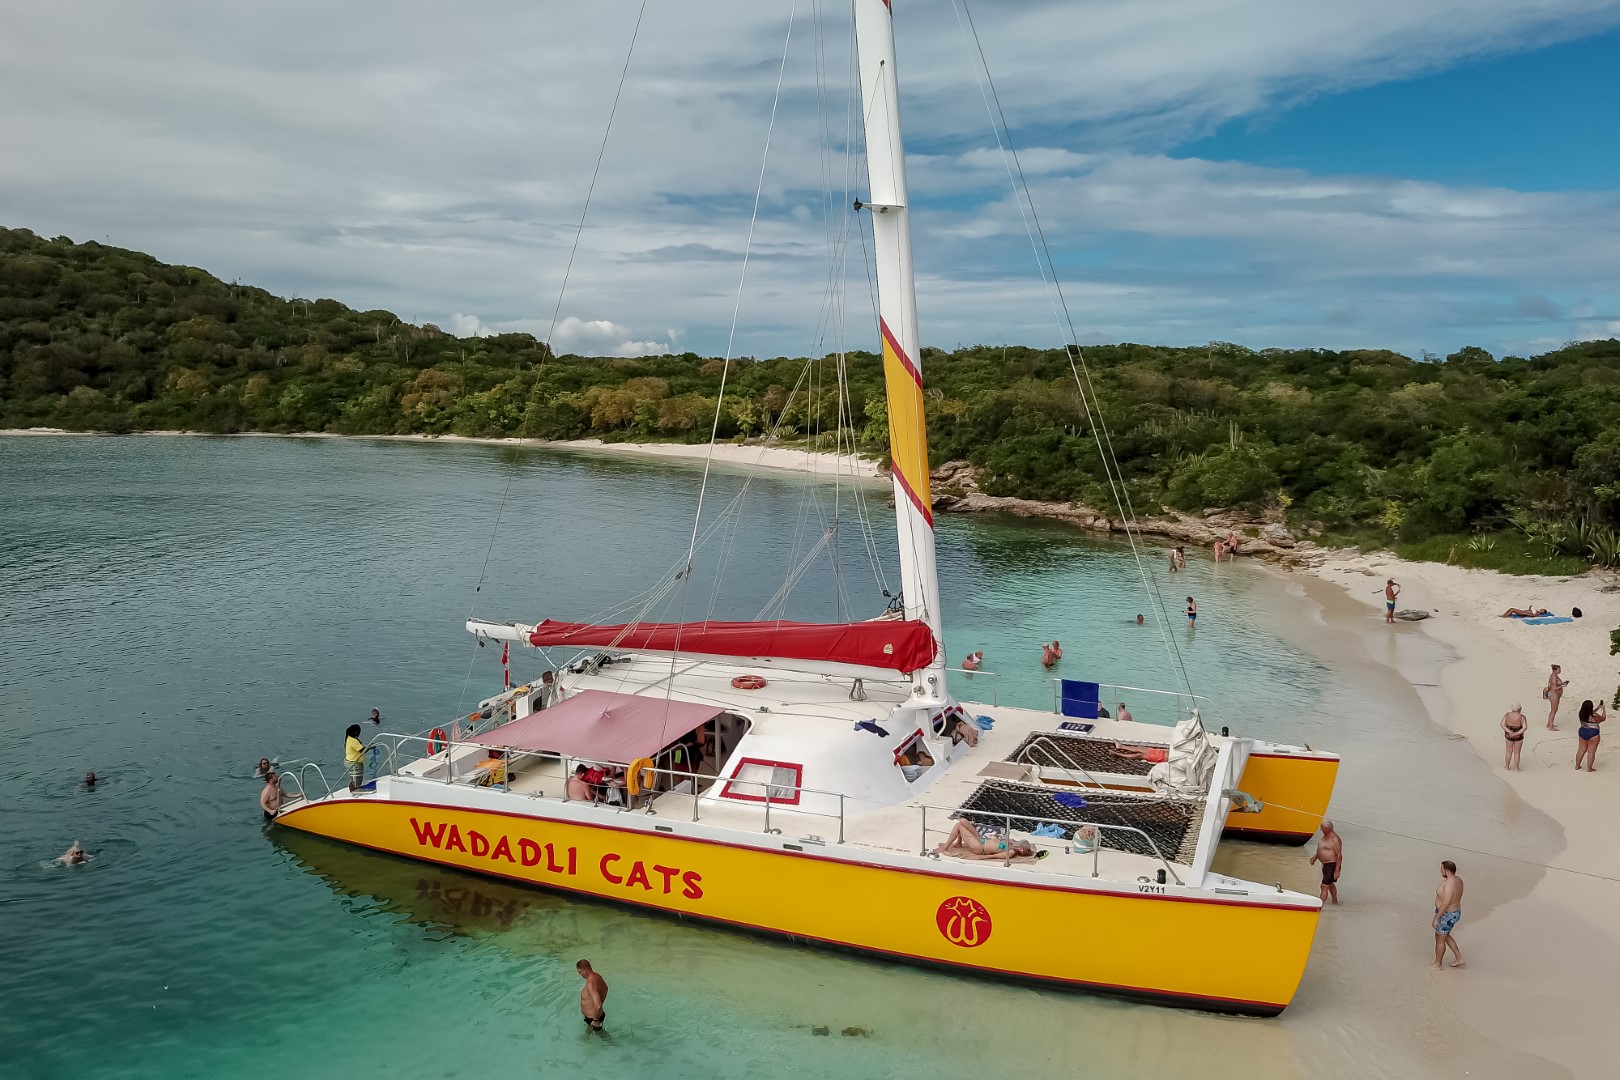 wadadli cats catamaran circumnavigation